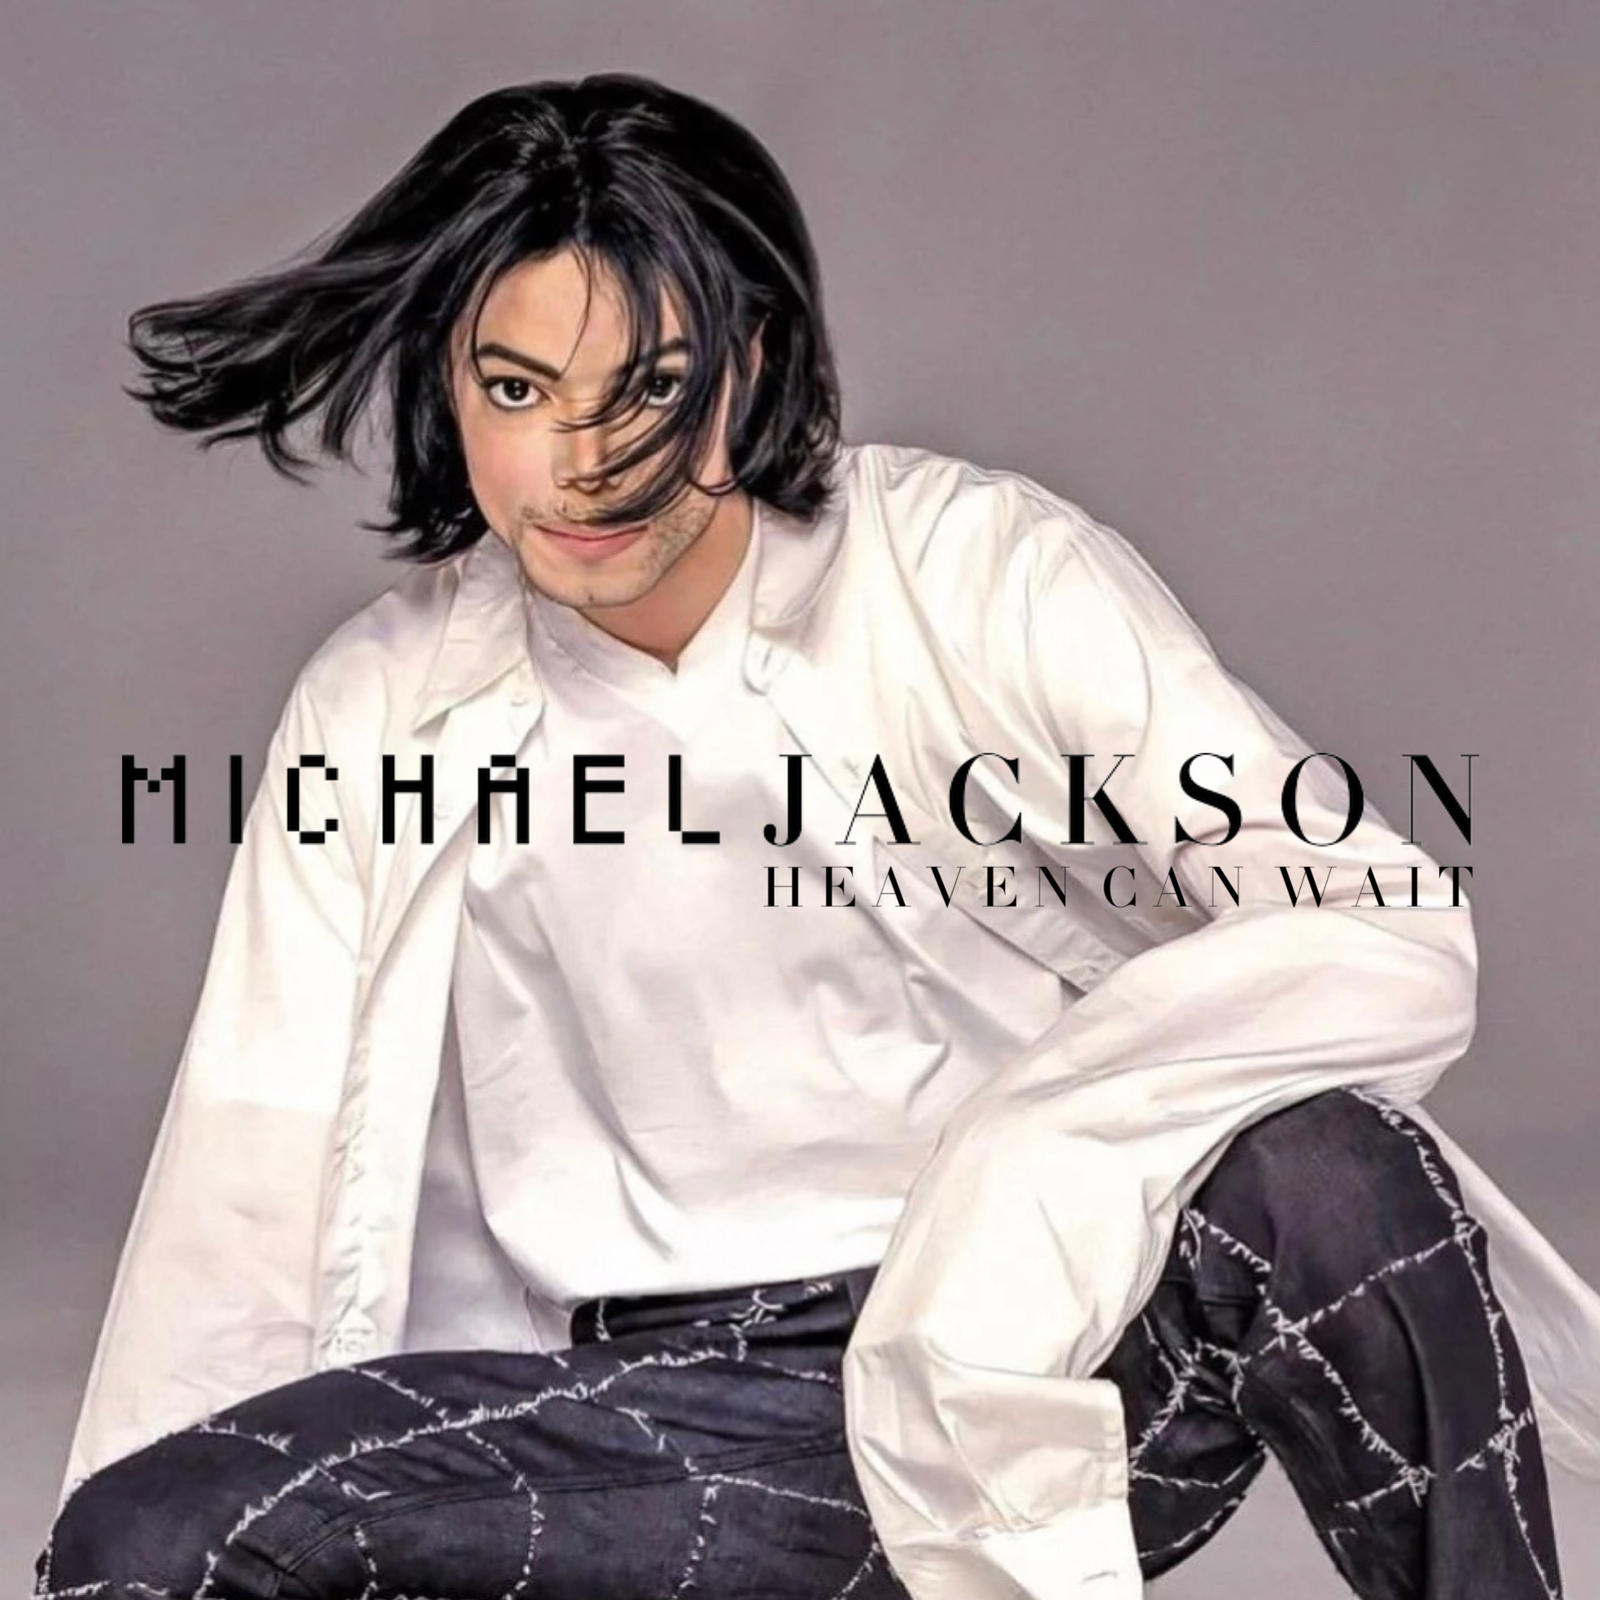 Michael Jackson - Heaven Can Wait (Album Cover) by SubwooferLabs on  DeviantArt